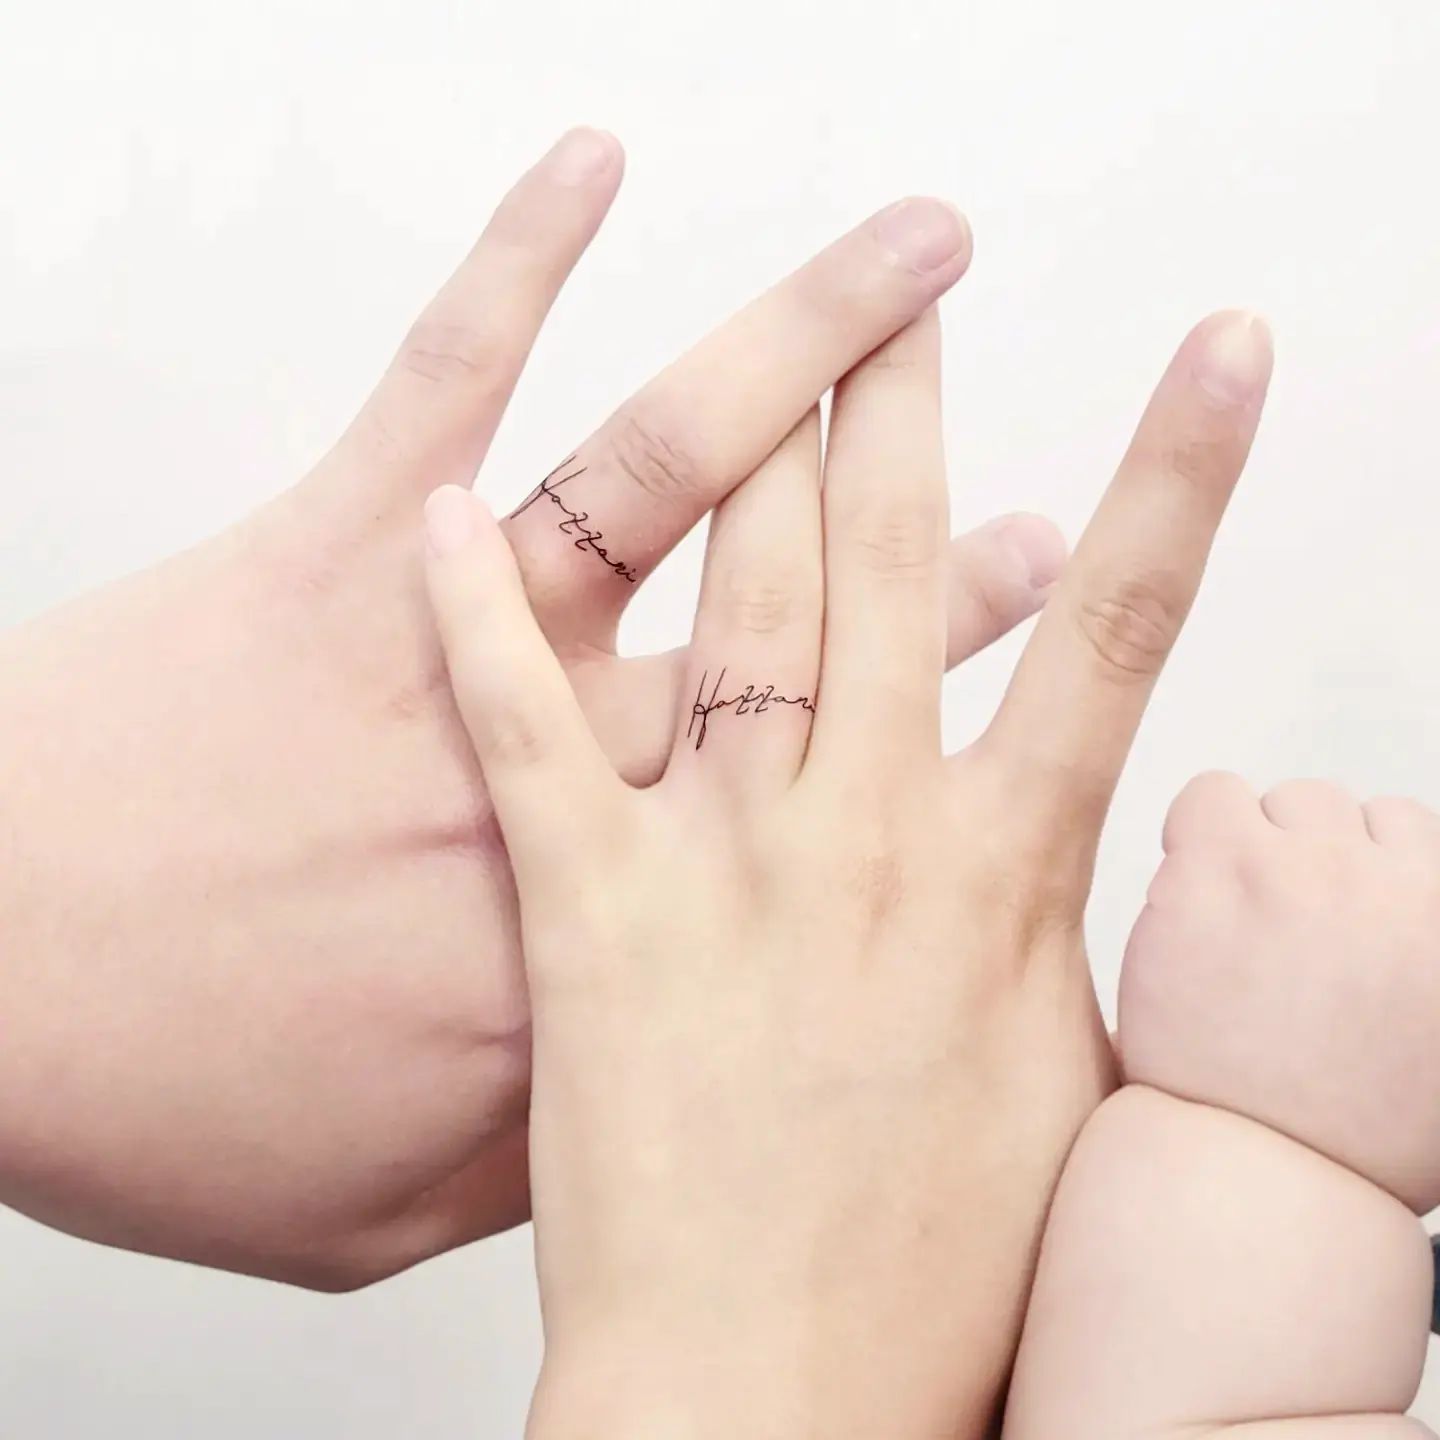 Letter Ring Tattoos on Ring Fingers